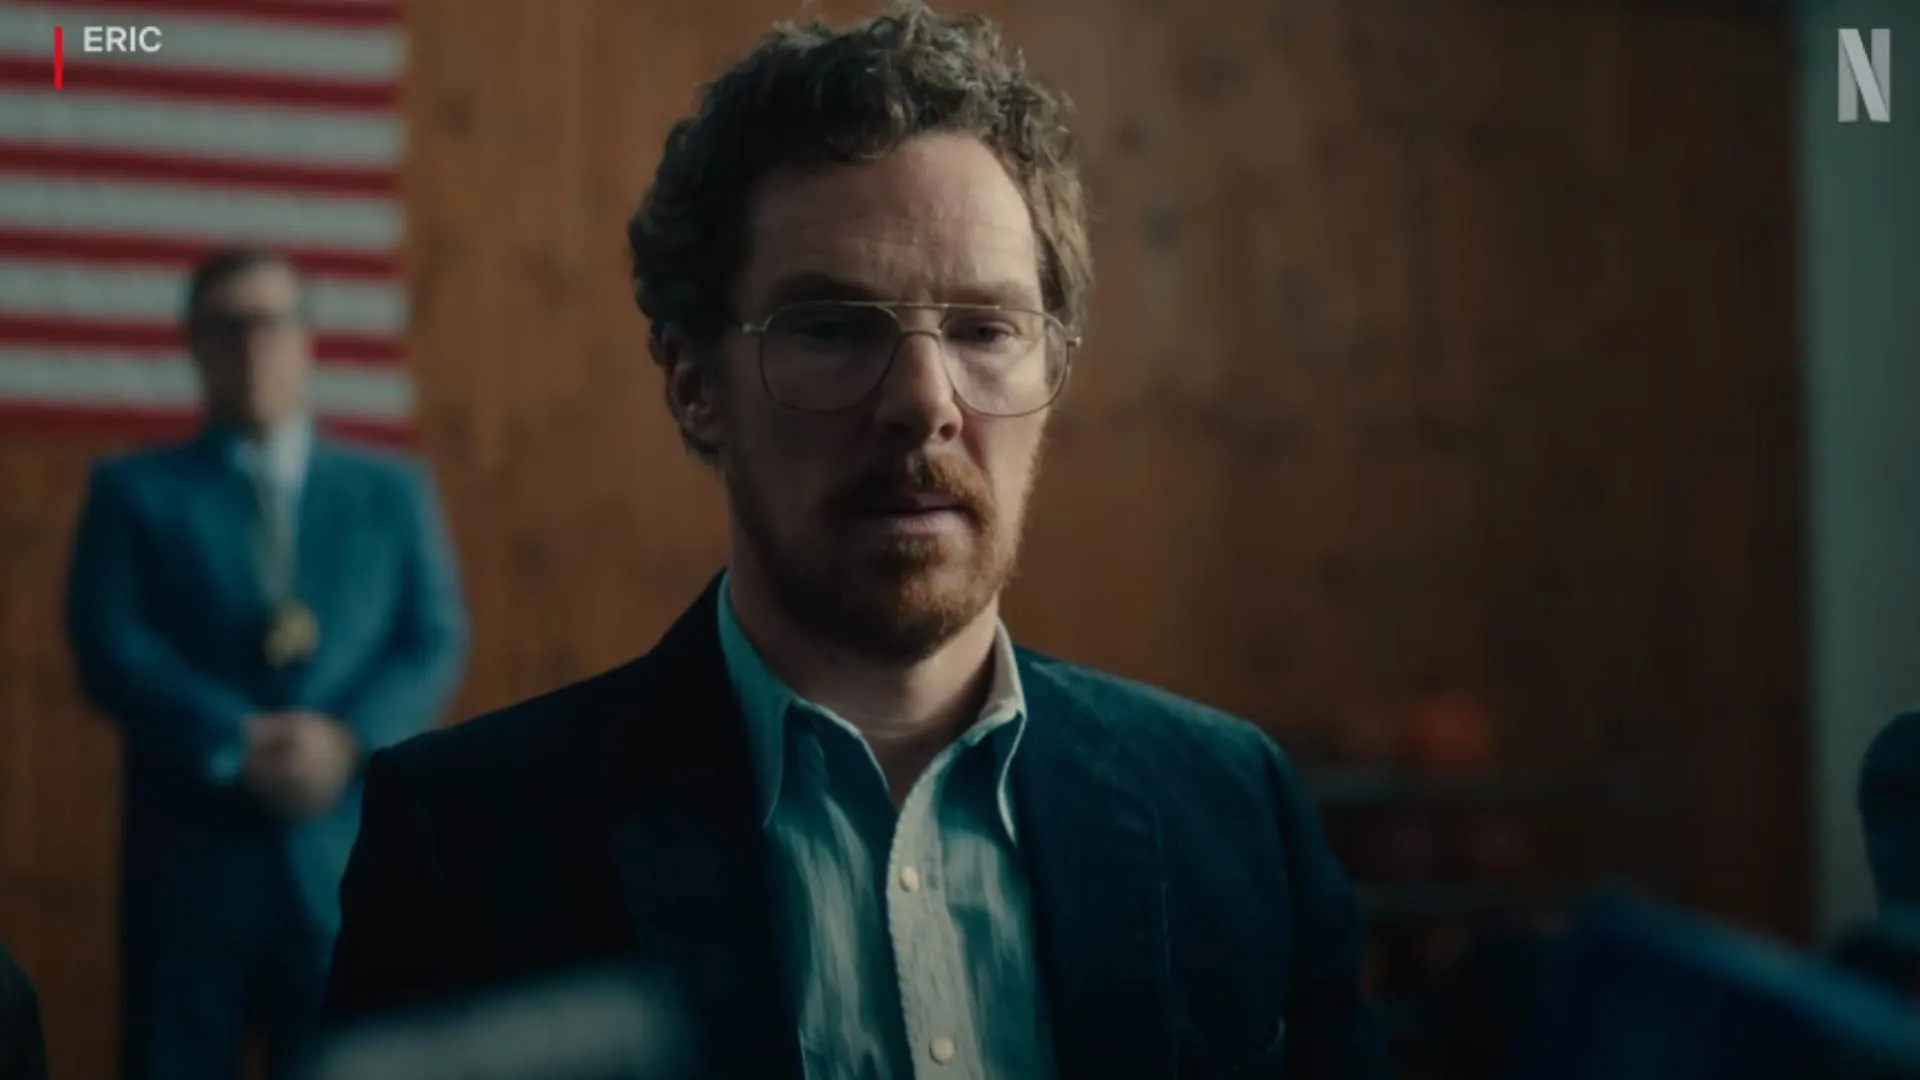 Benedict Cumberbatch is seen as Desperate father in 'Eric' Trailer